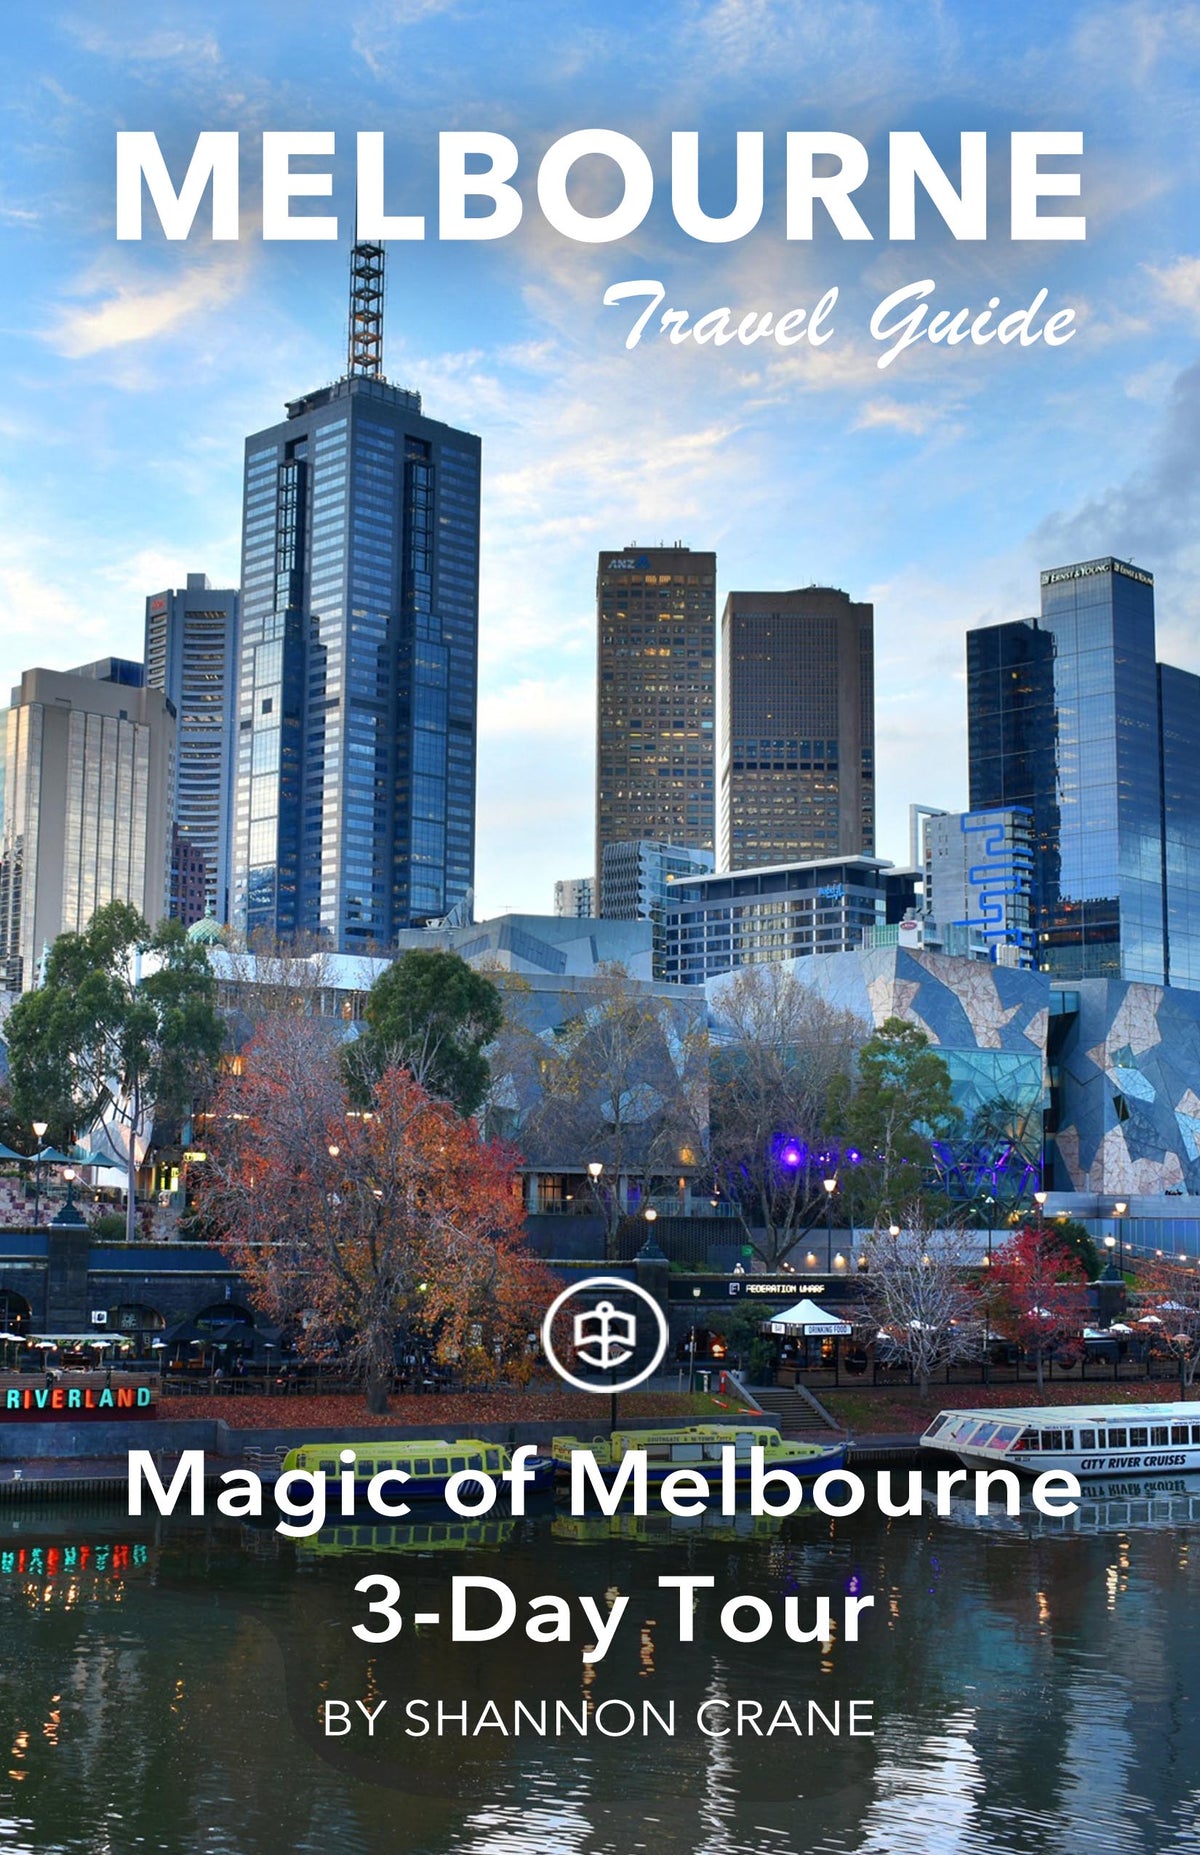 Magic of Melbourne 3-Day Tour